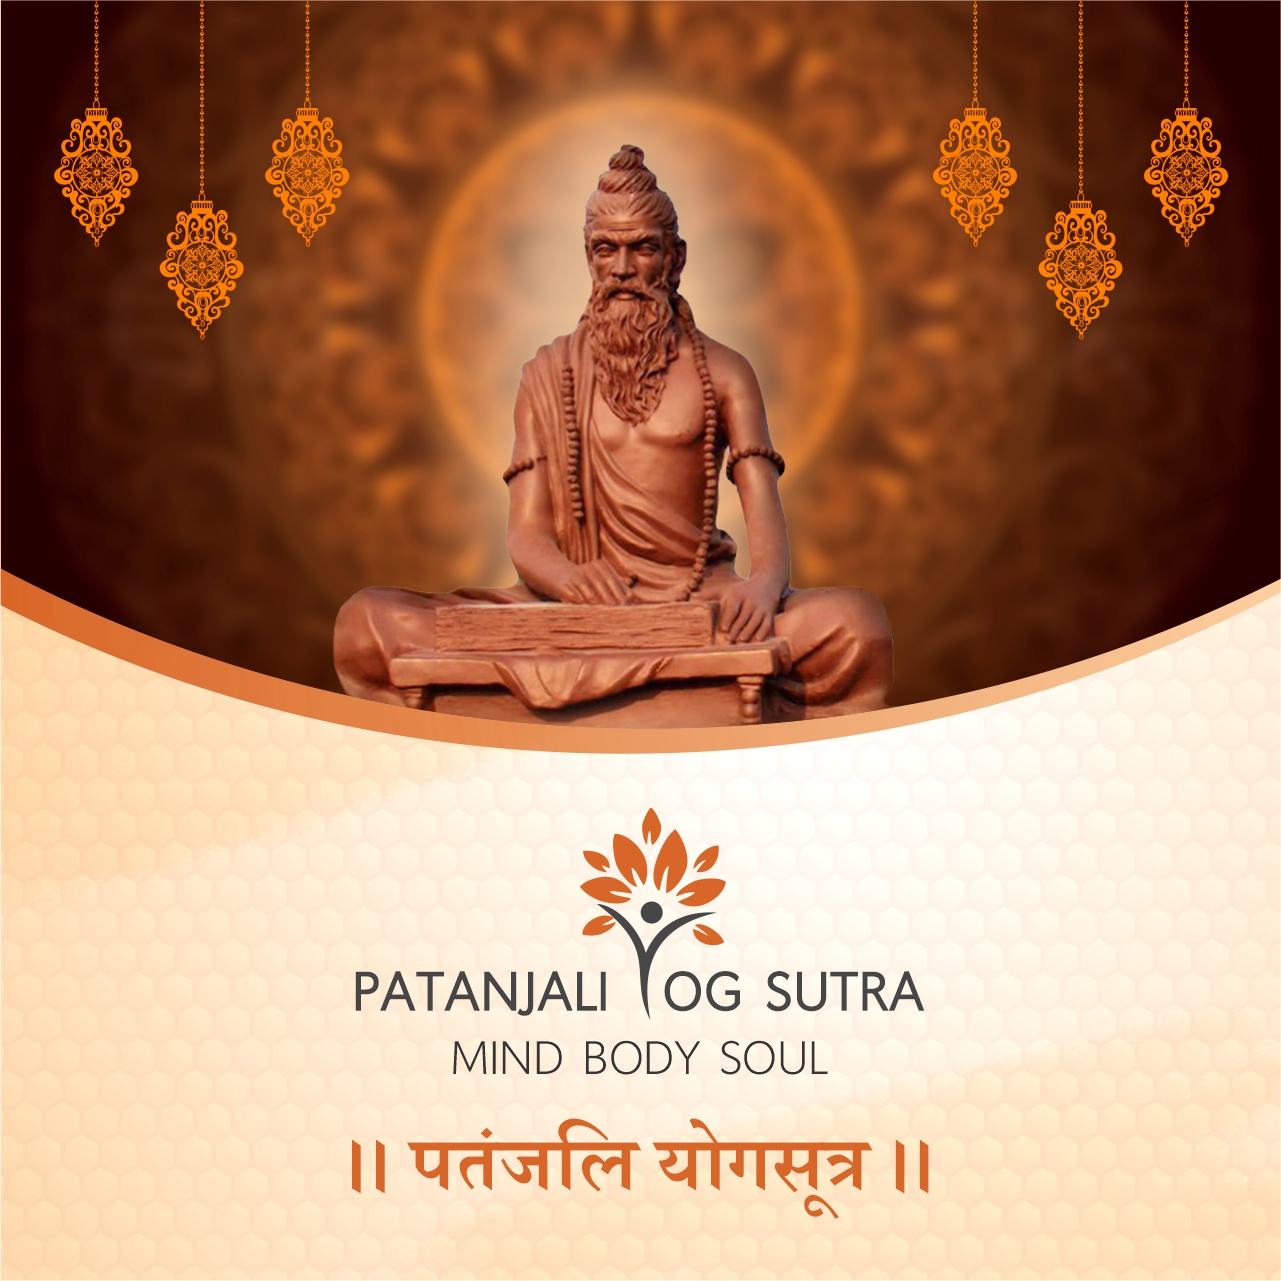 Vibhuti Pada : Chapter 3 of Patanjali Yoga Sutra - Patanjali Yog Sutra